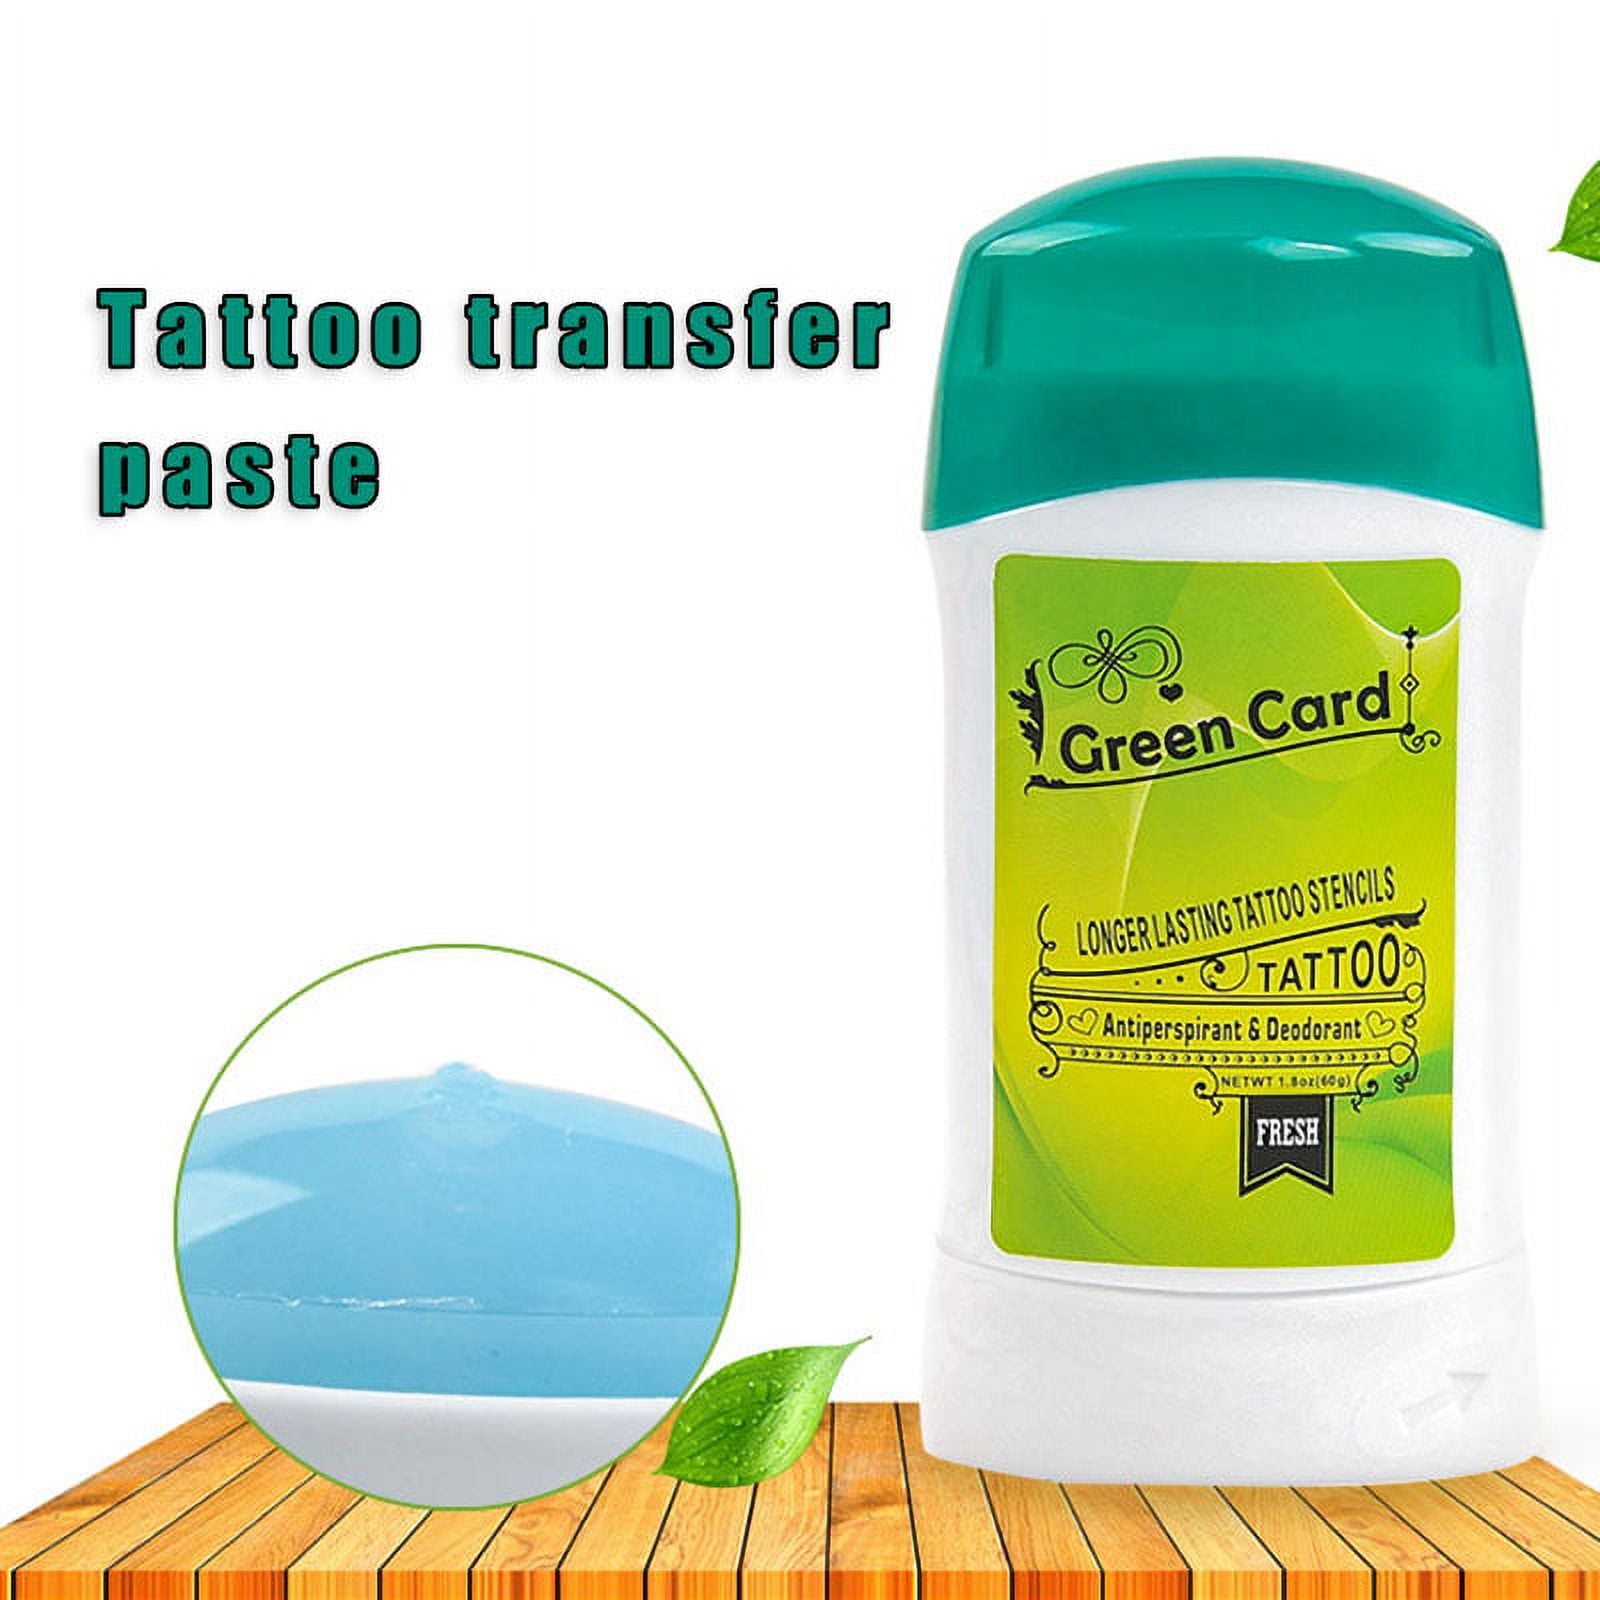 Greensen Stencil Gel,Stencil Cream,30ml Professional Tattoo Transfer Gel  Stencil Cream Body Tattoo Art Tools Accessory 